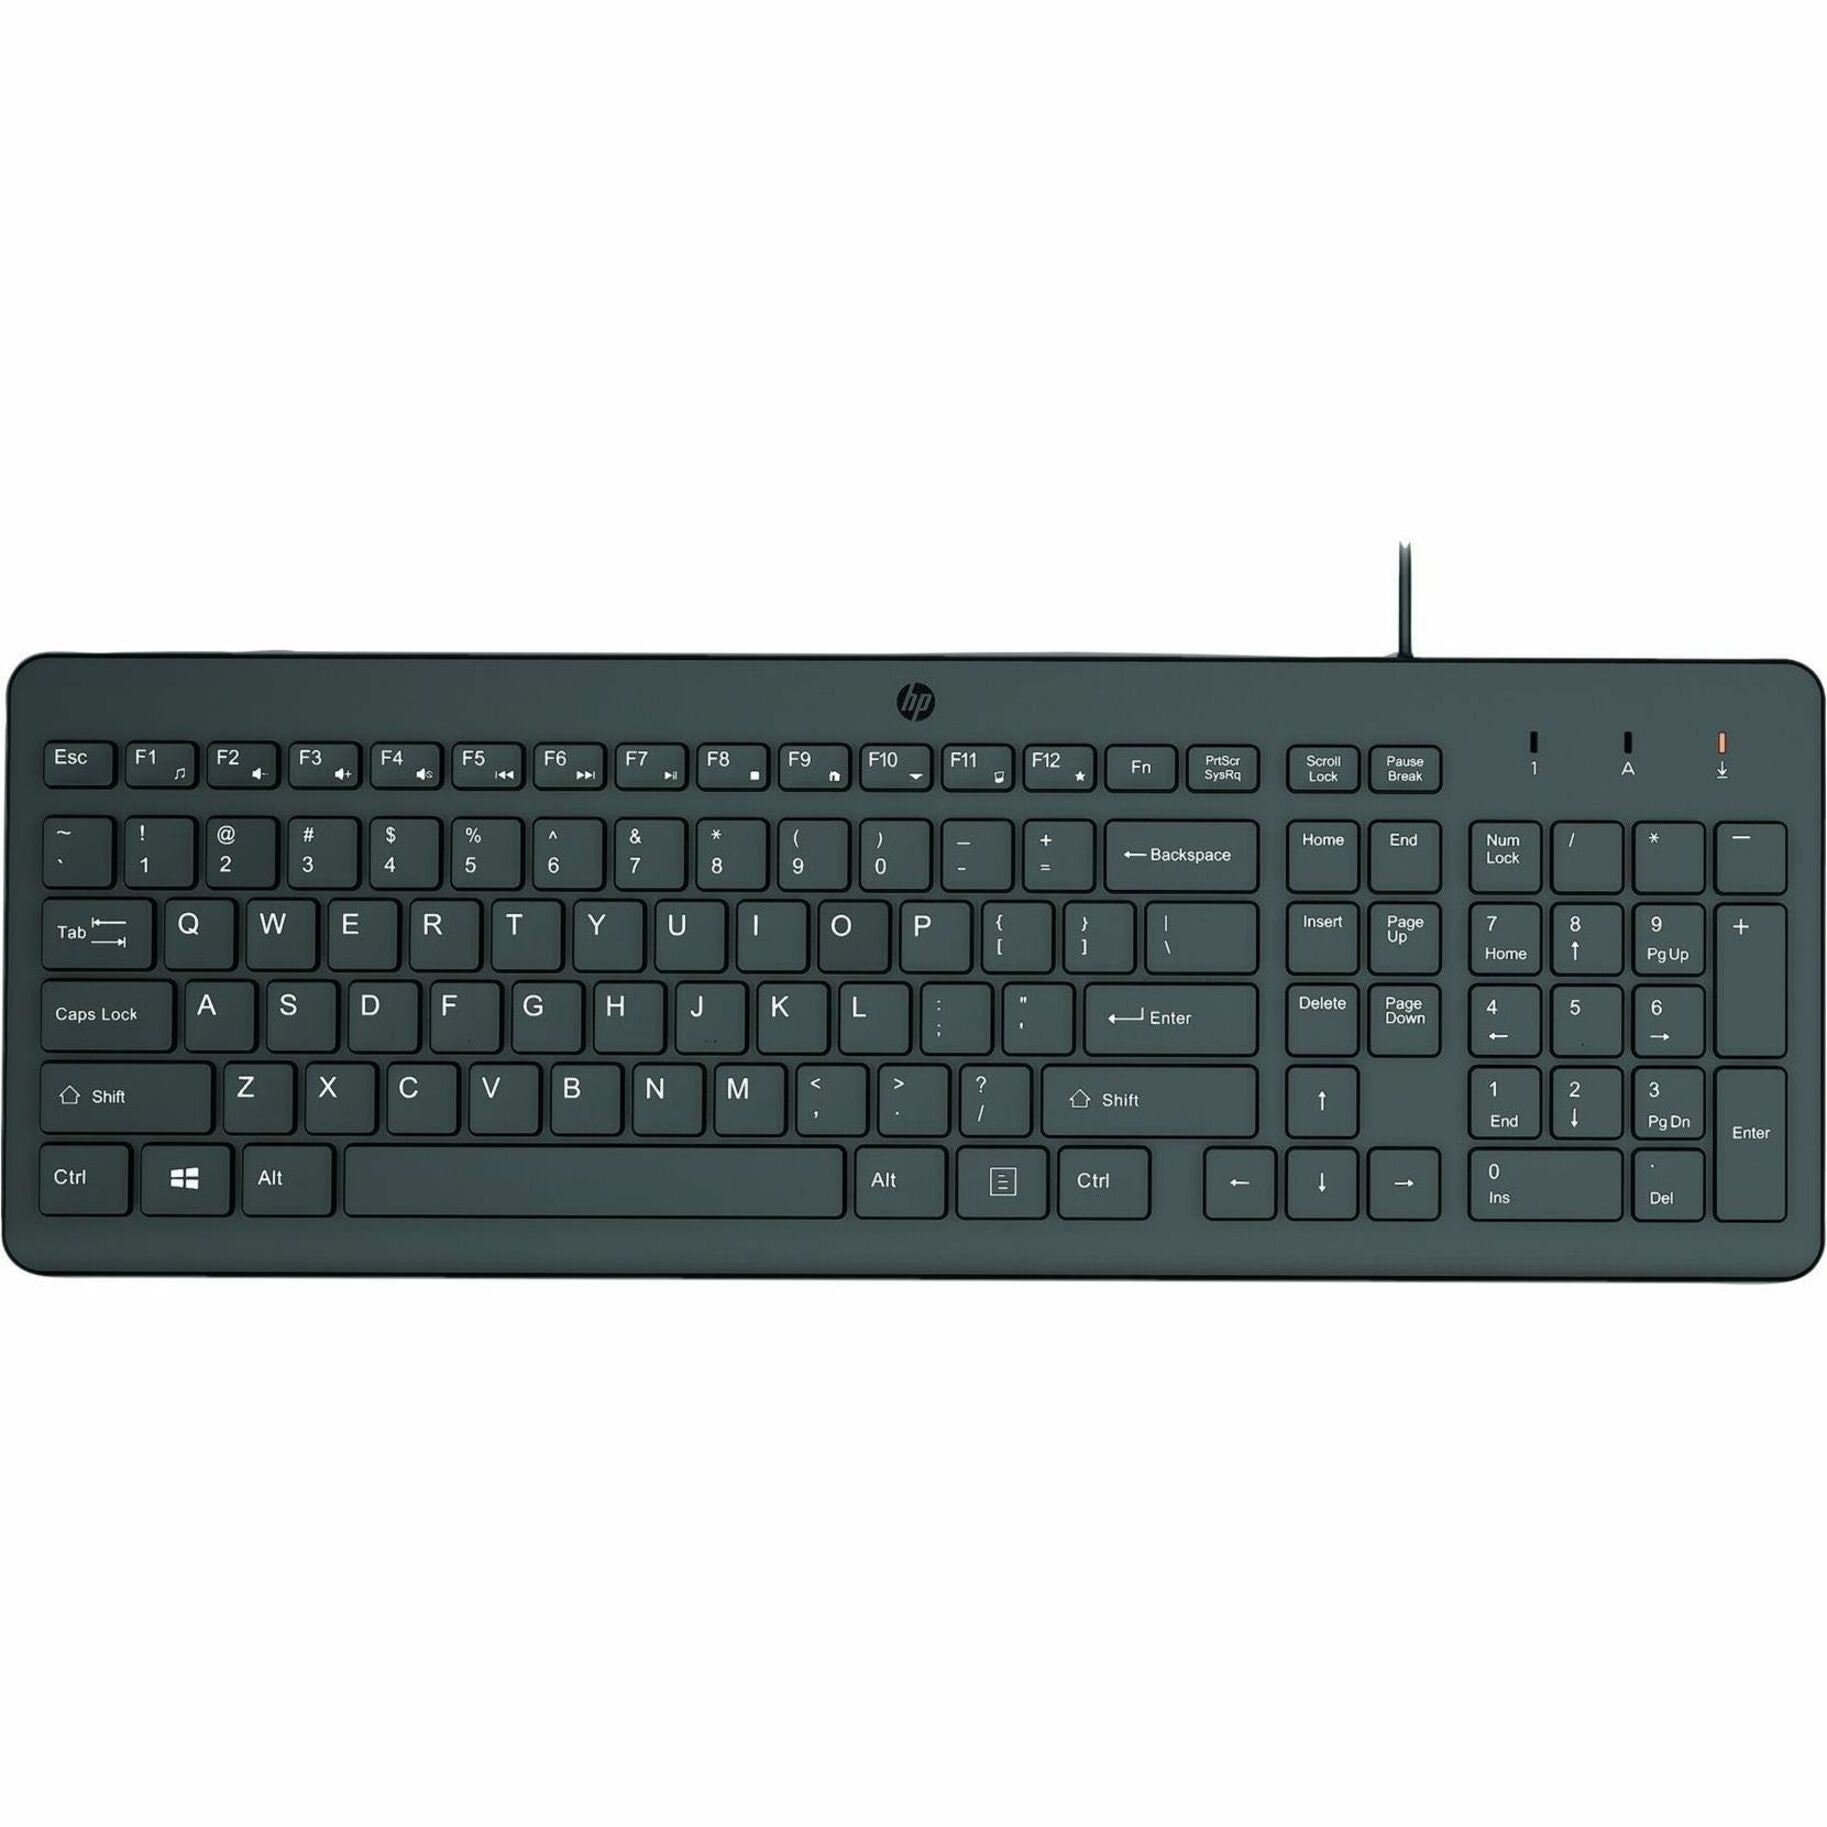 HP 664R5AA#ABL 150 Wired Keyboard, USB Type A, 2 Year Warranty